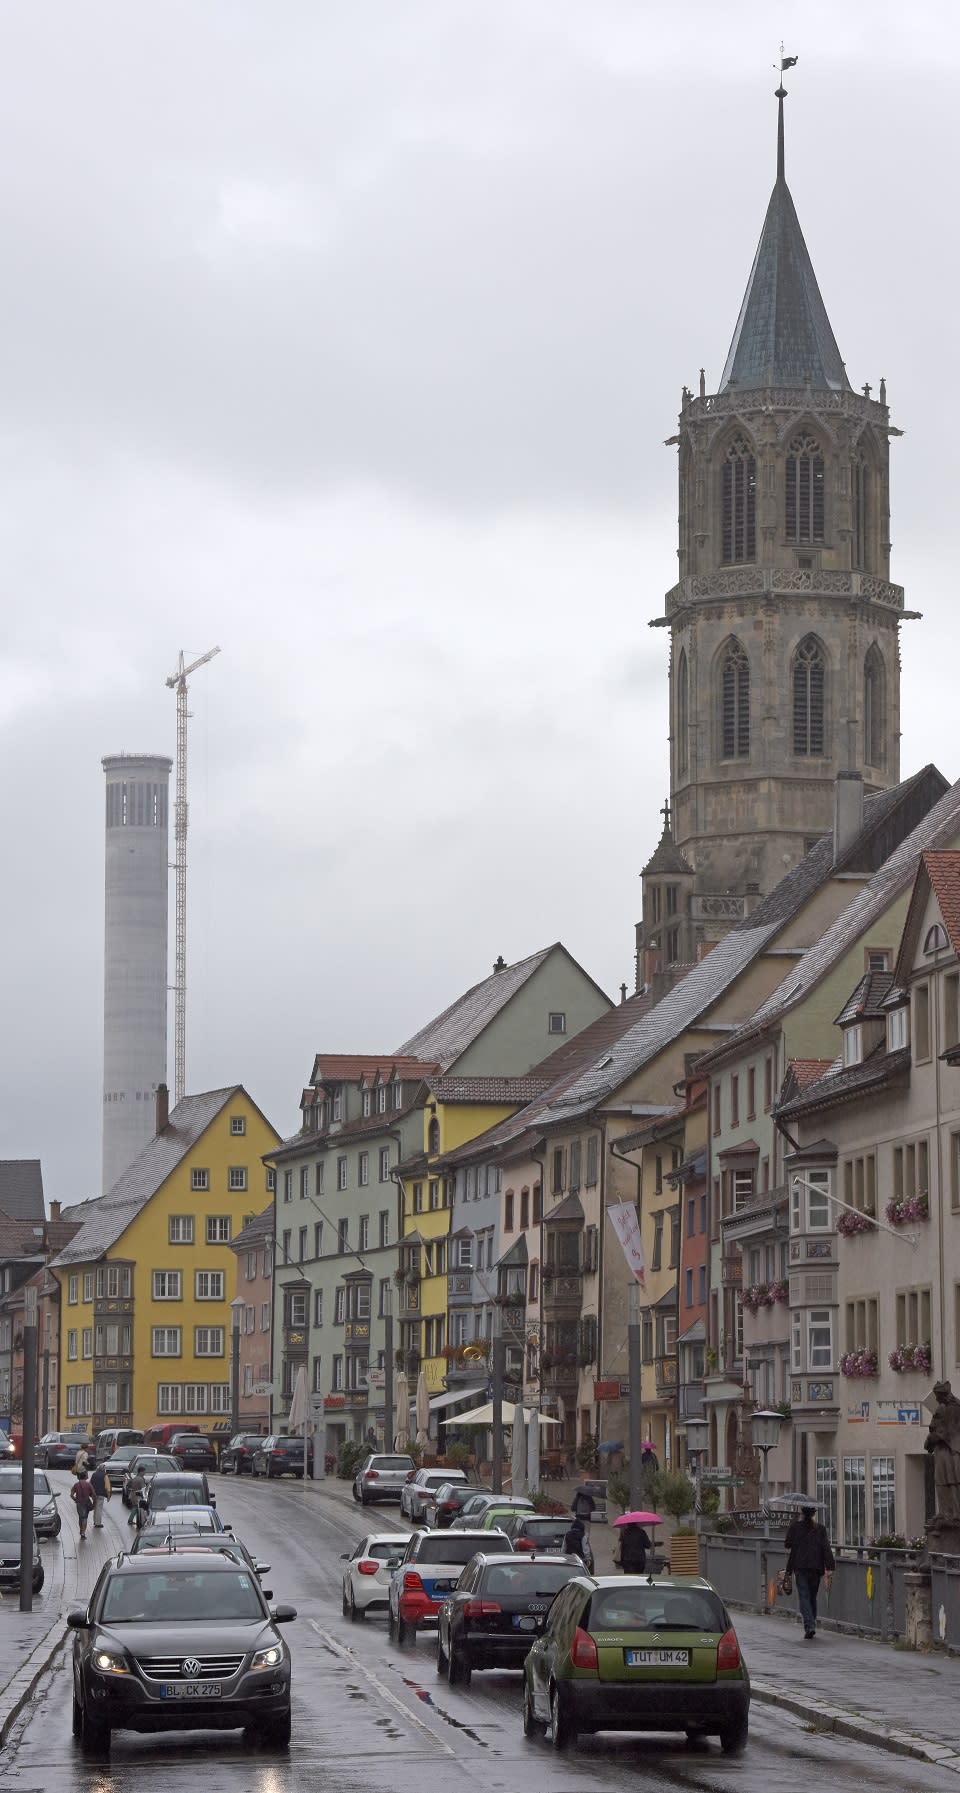 ThyssenKrupp baut Mega-Turm: Test für neue Lift-Technologie